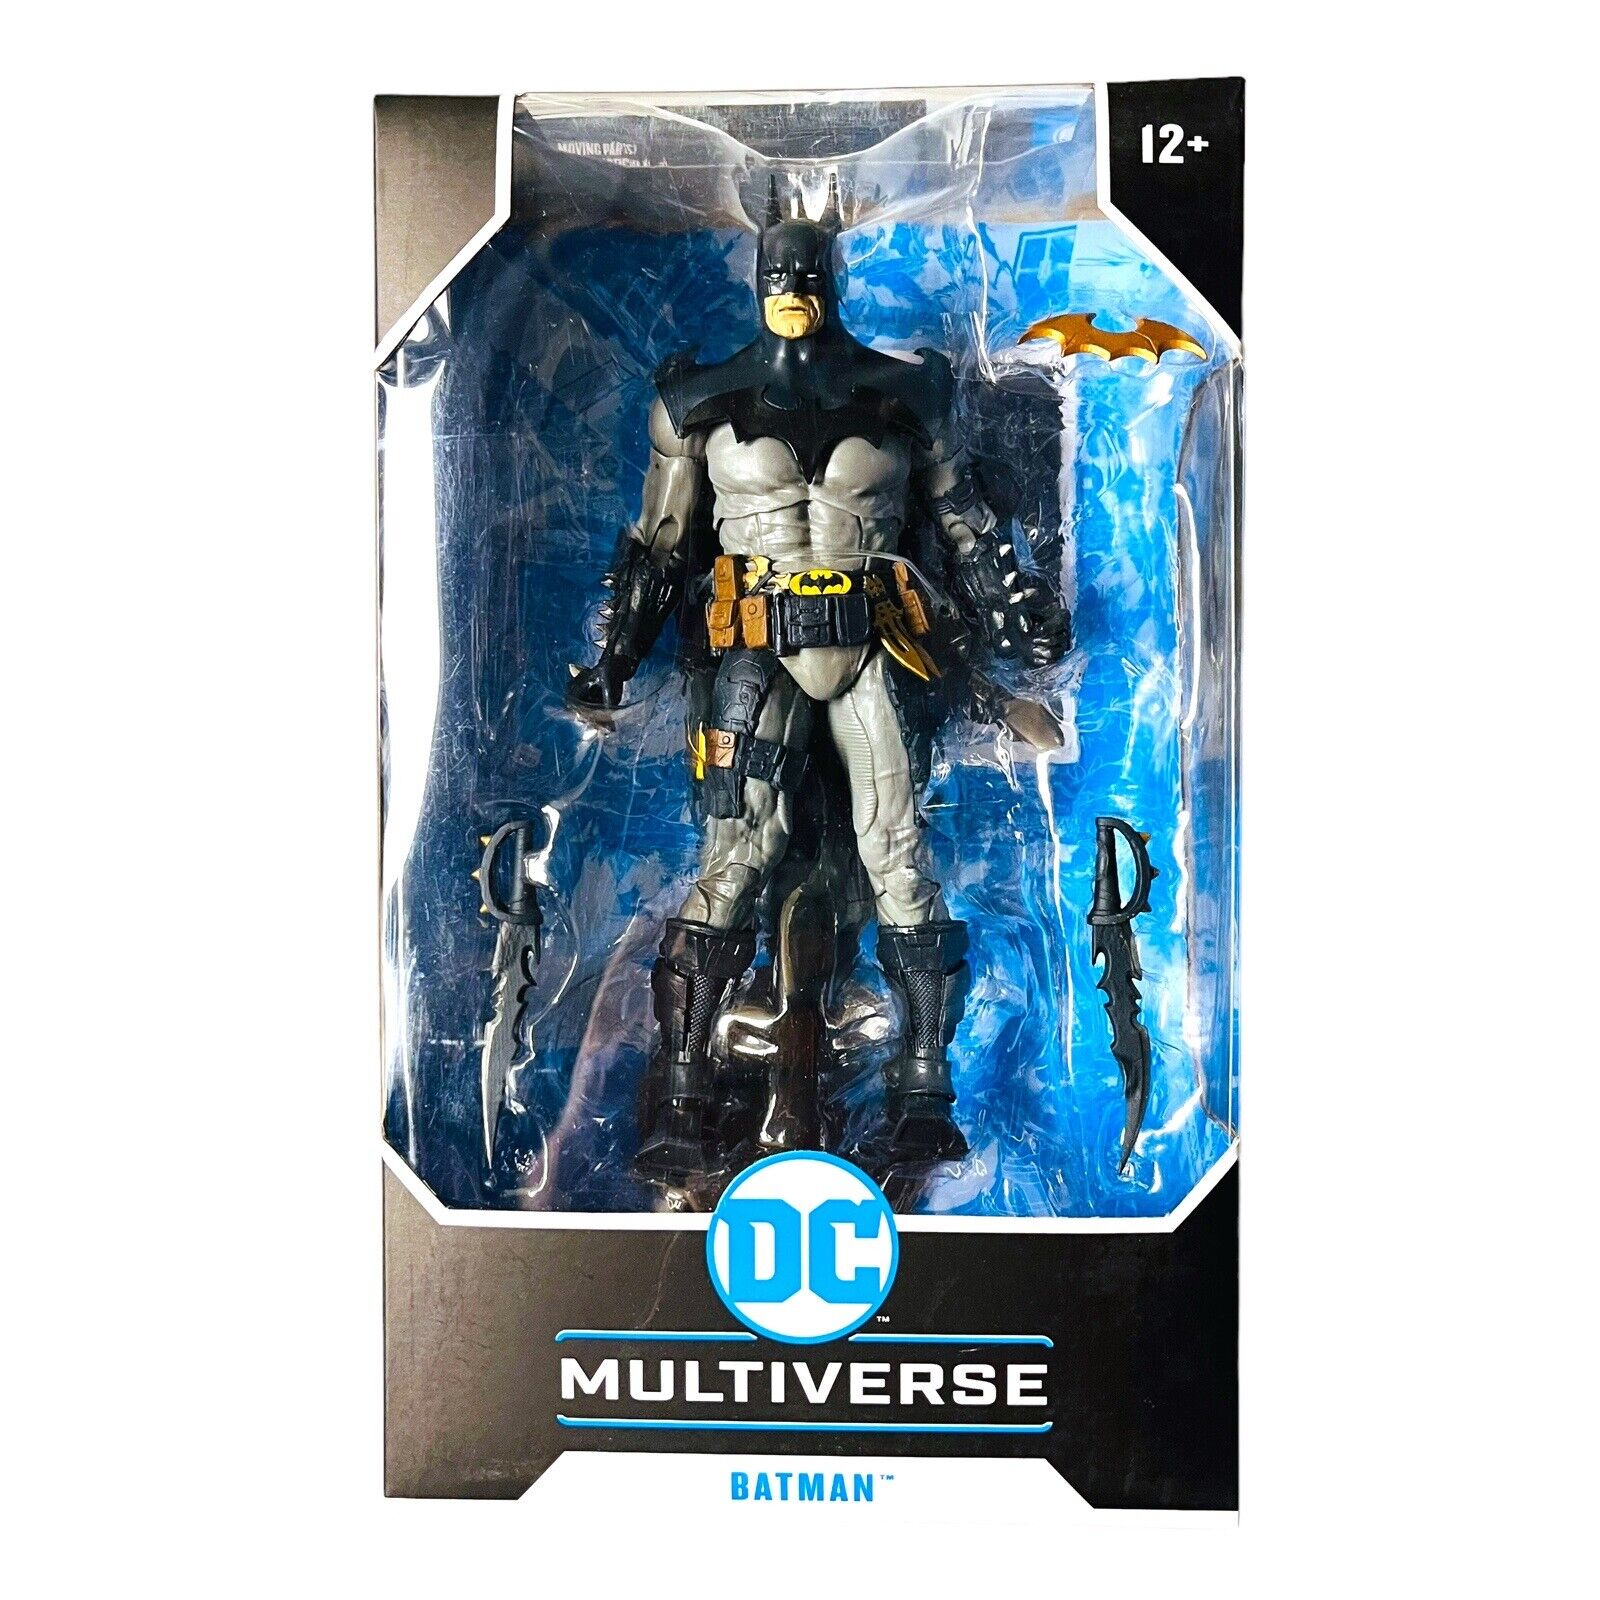 McFarlane Batman DC Multiverse 7 inch Figure Designed by Todd Blue Version FAST McFarlane Toys 15006